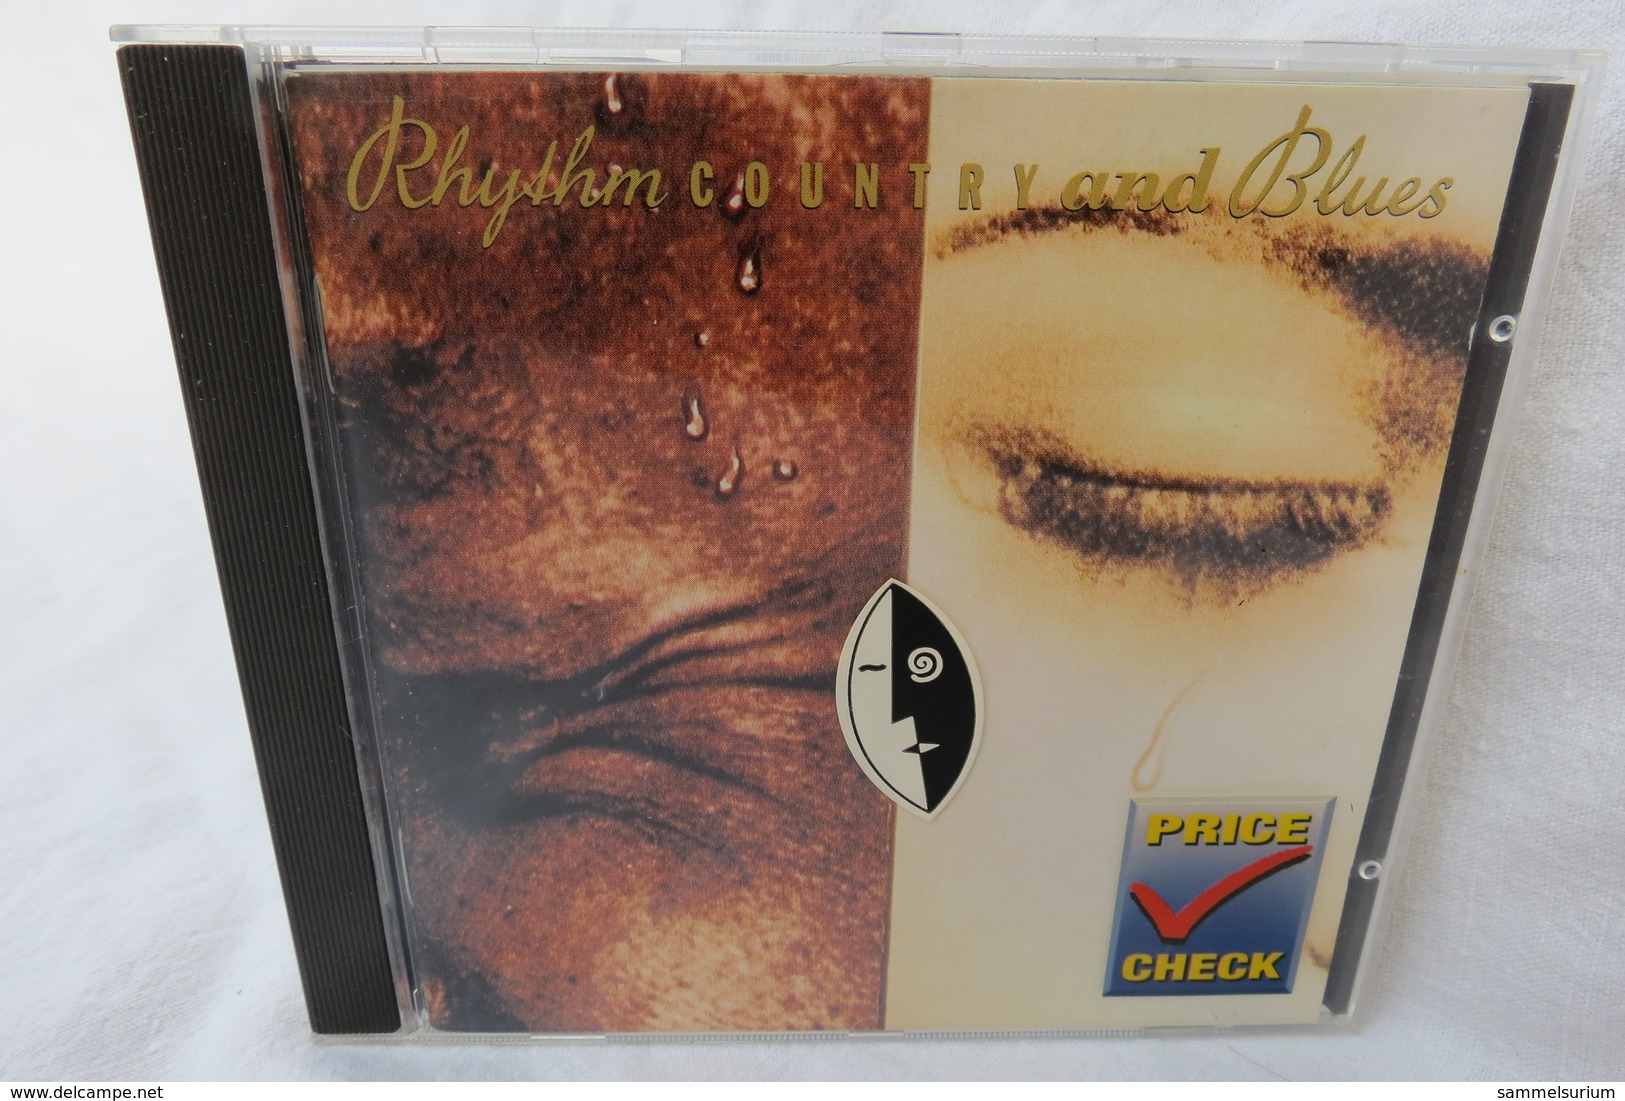 CD "Rhythm Country And Blues" - Soul - R&B